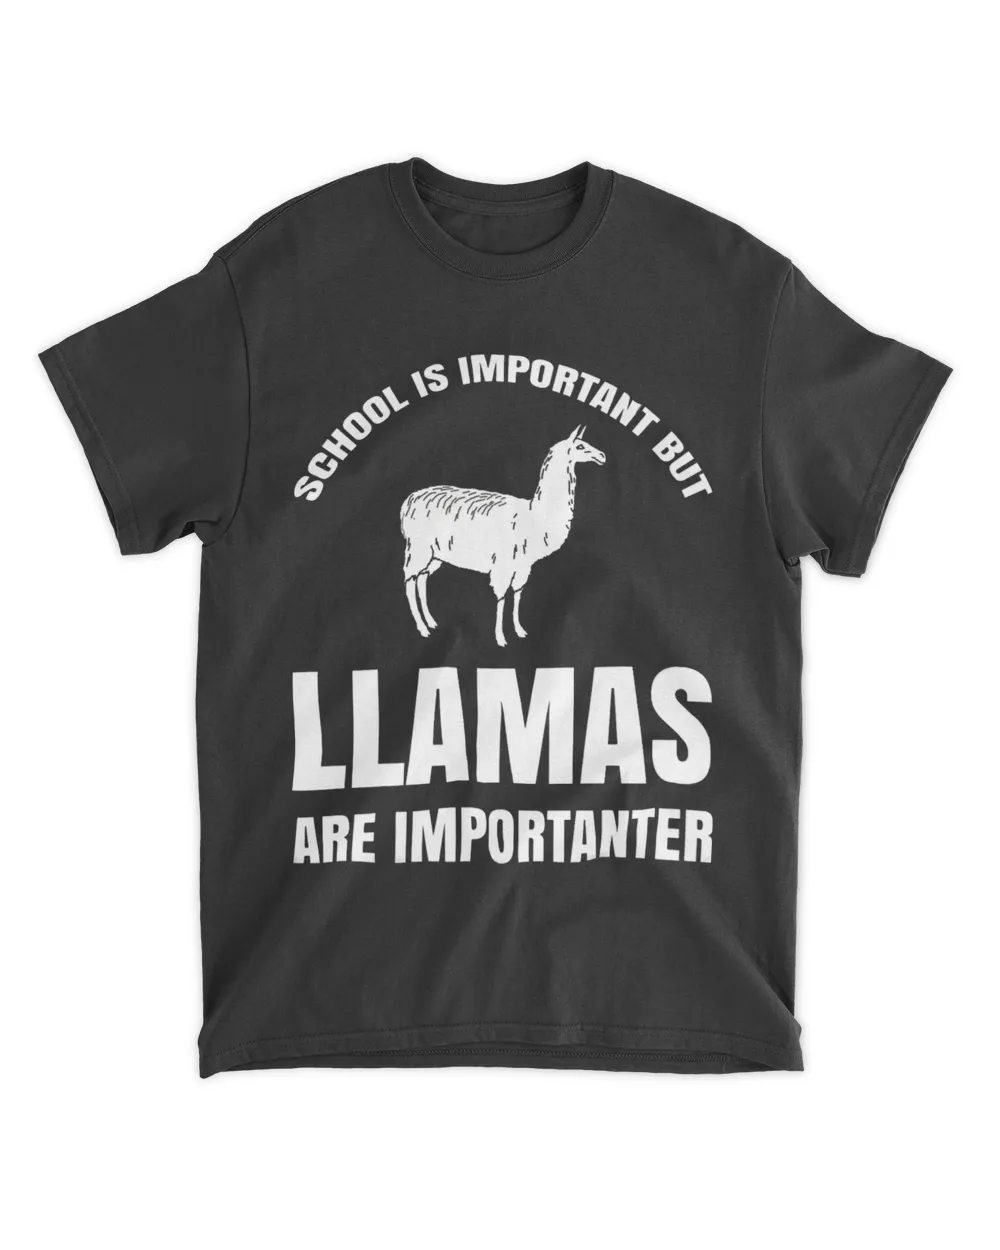 School Is Important But Llamas Importanter Funny Llama Lover